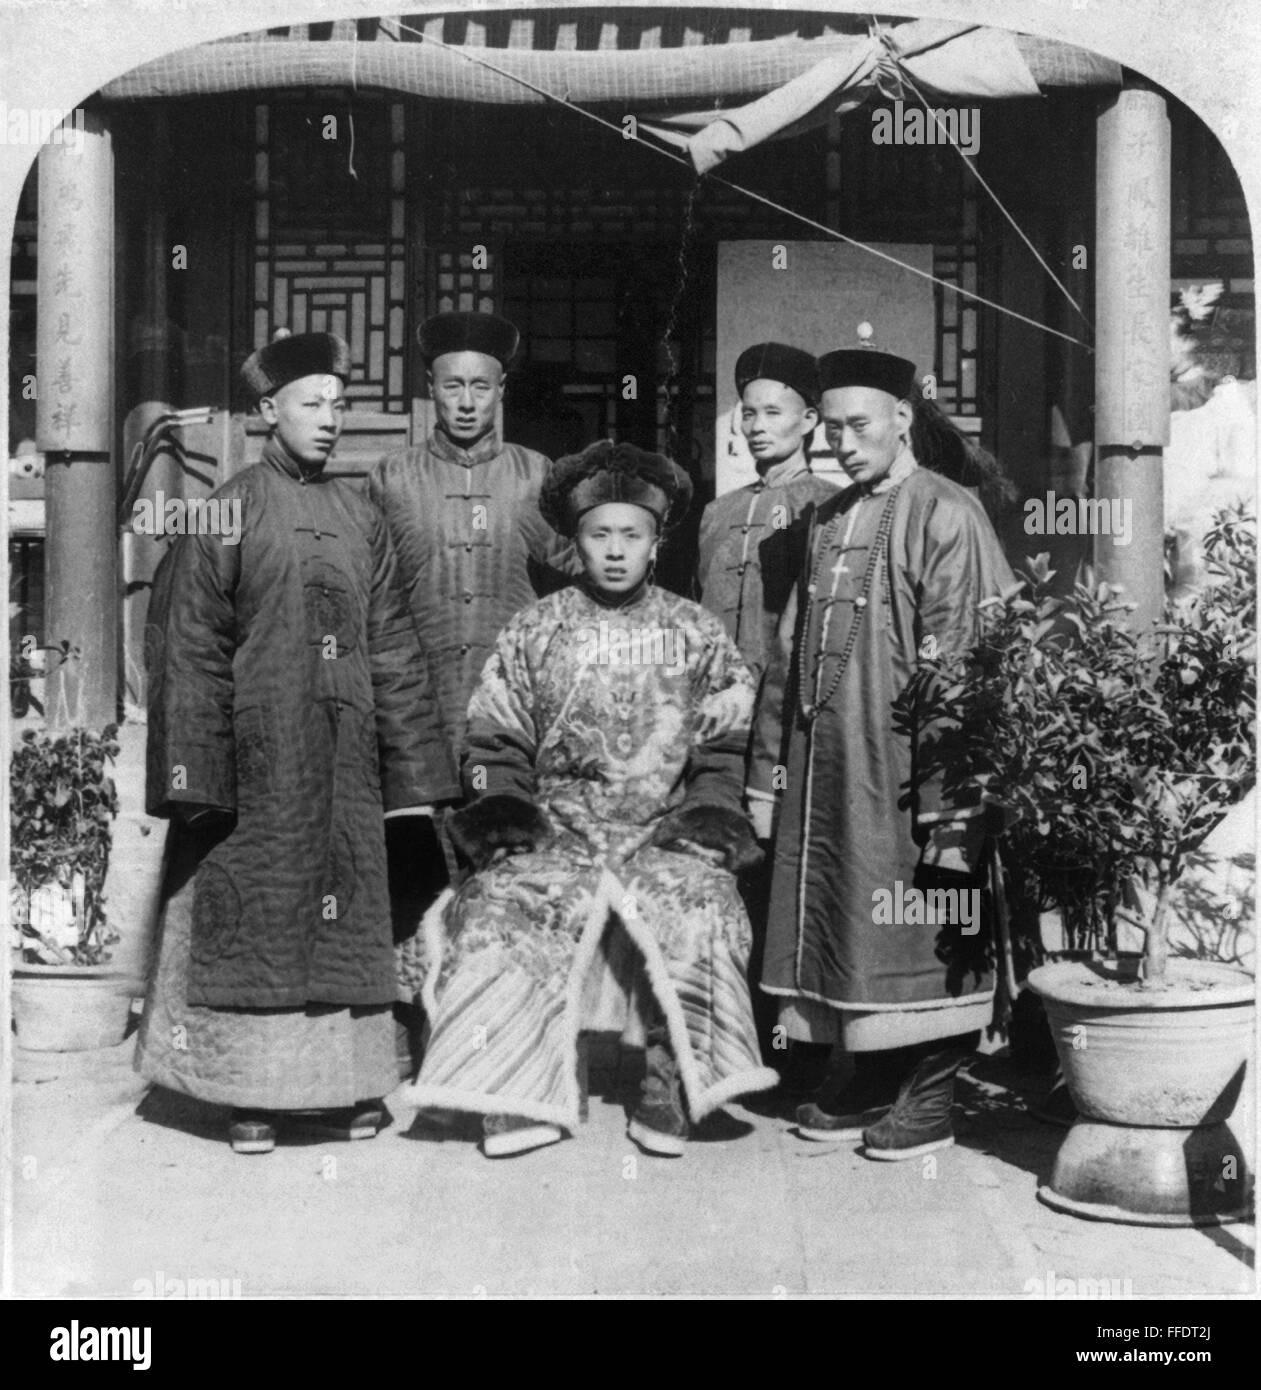 PEKING: MANCHU, 1901. /nGroup of Manchu men at Peking, China. Stereograph, 1901. Stock Photo